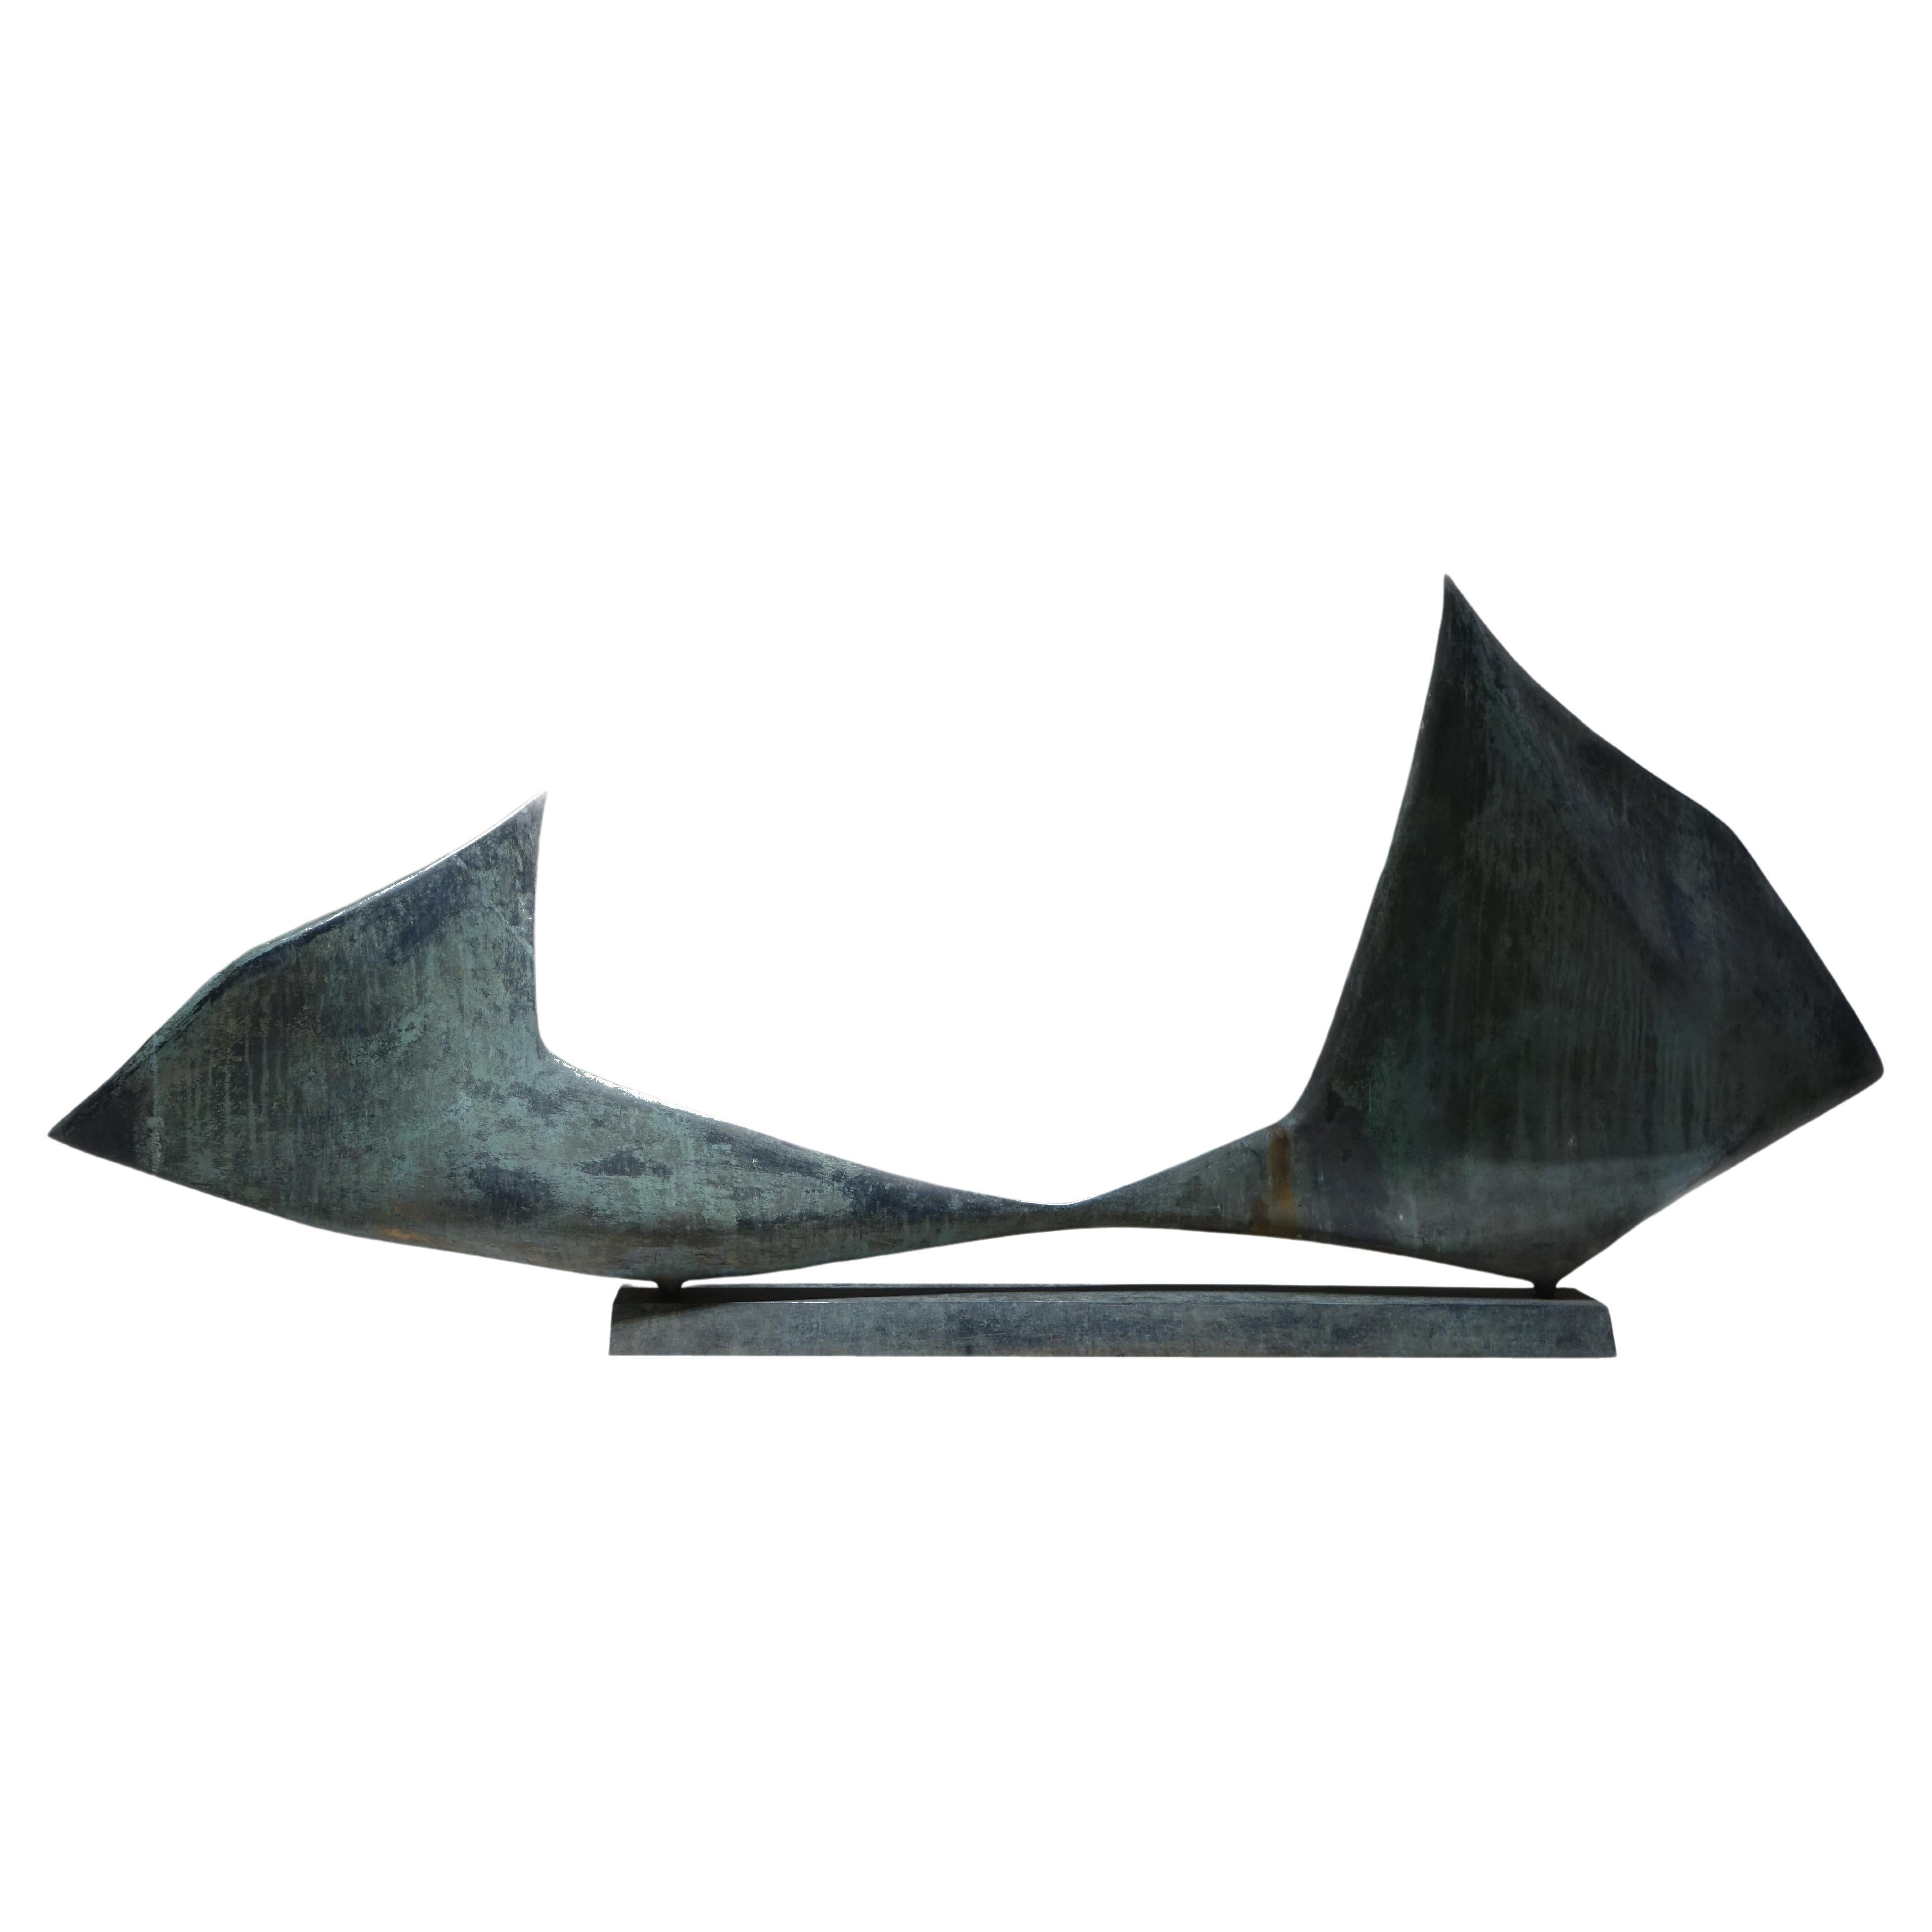 Salvatore Messina, Bronze Sculpture, “the Sails”